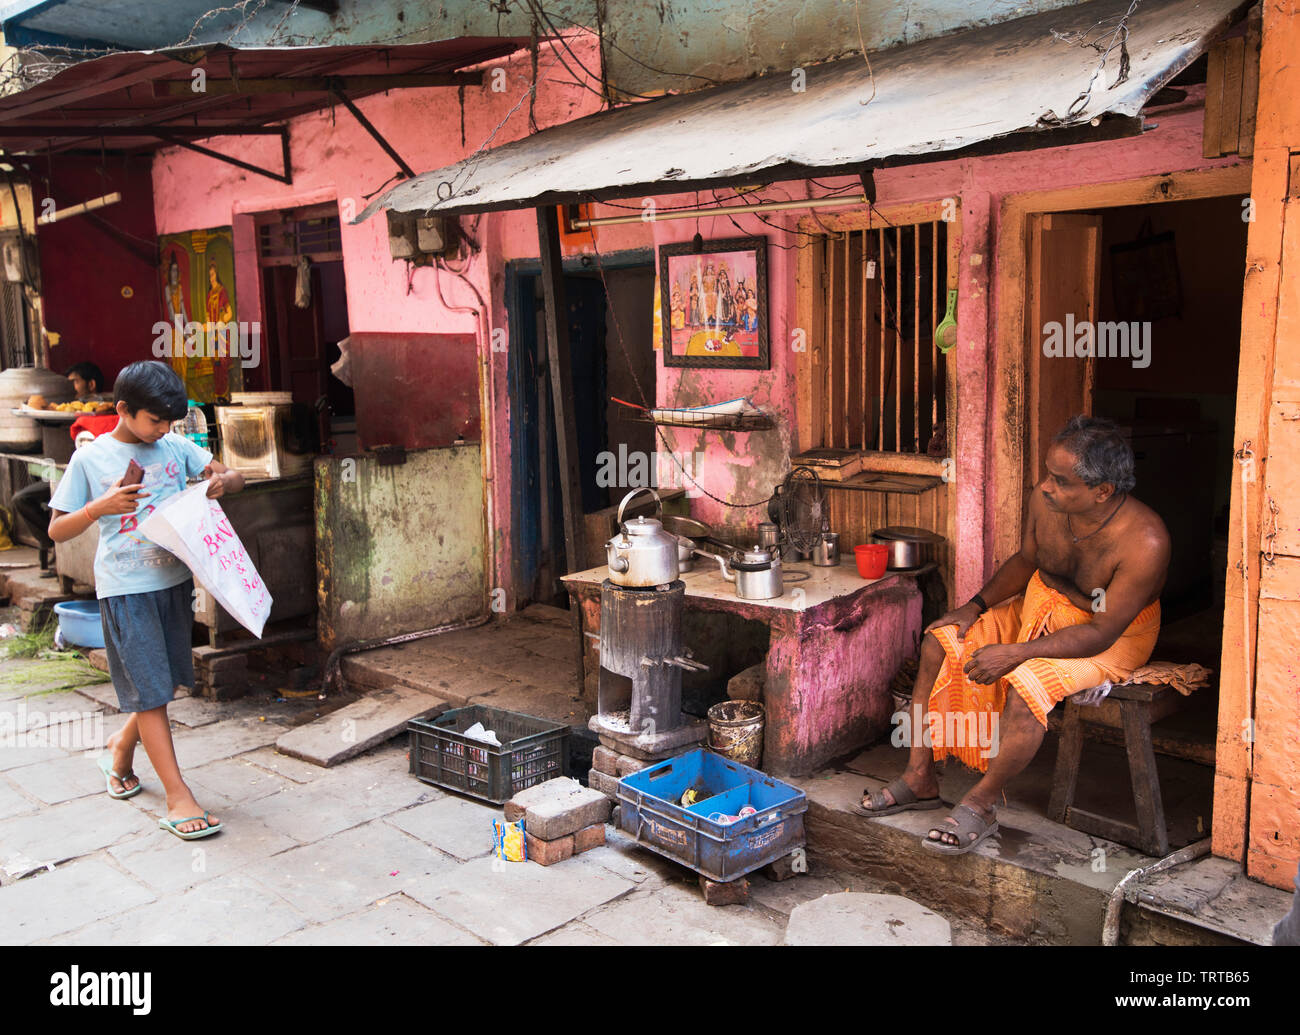 Narrow ghat alley in poverty area, Kolkata (Calcutta) India Stock Photo